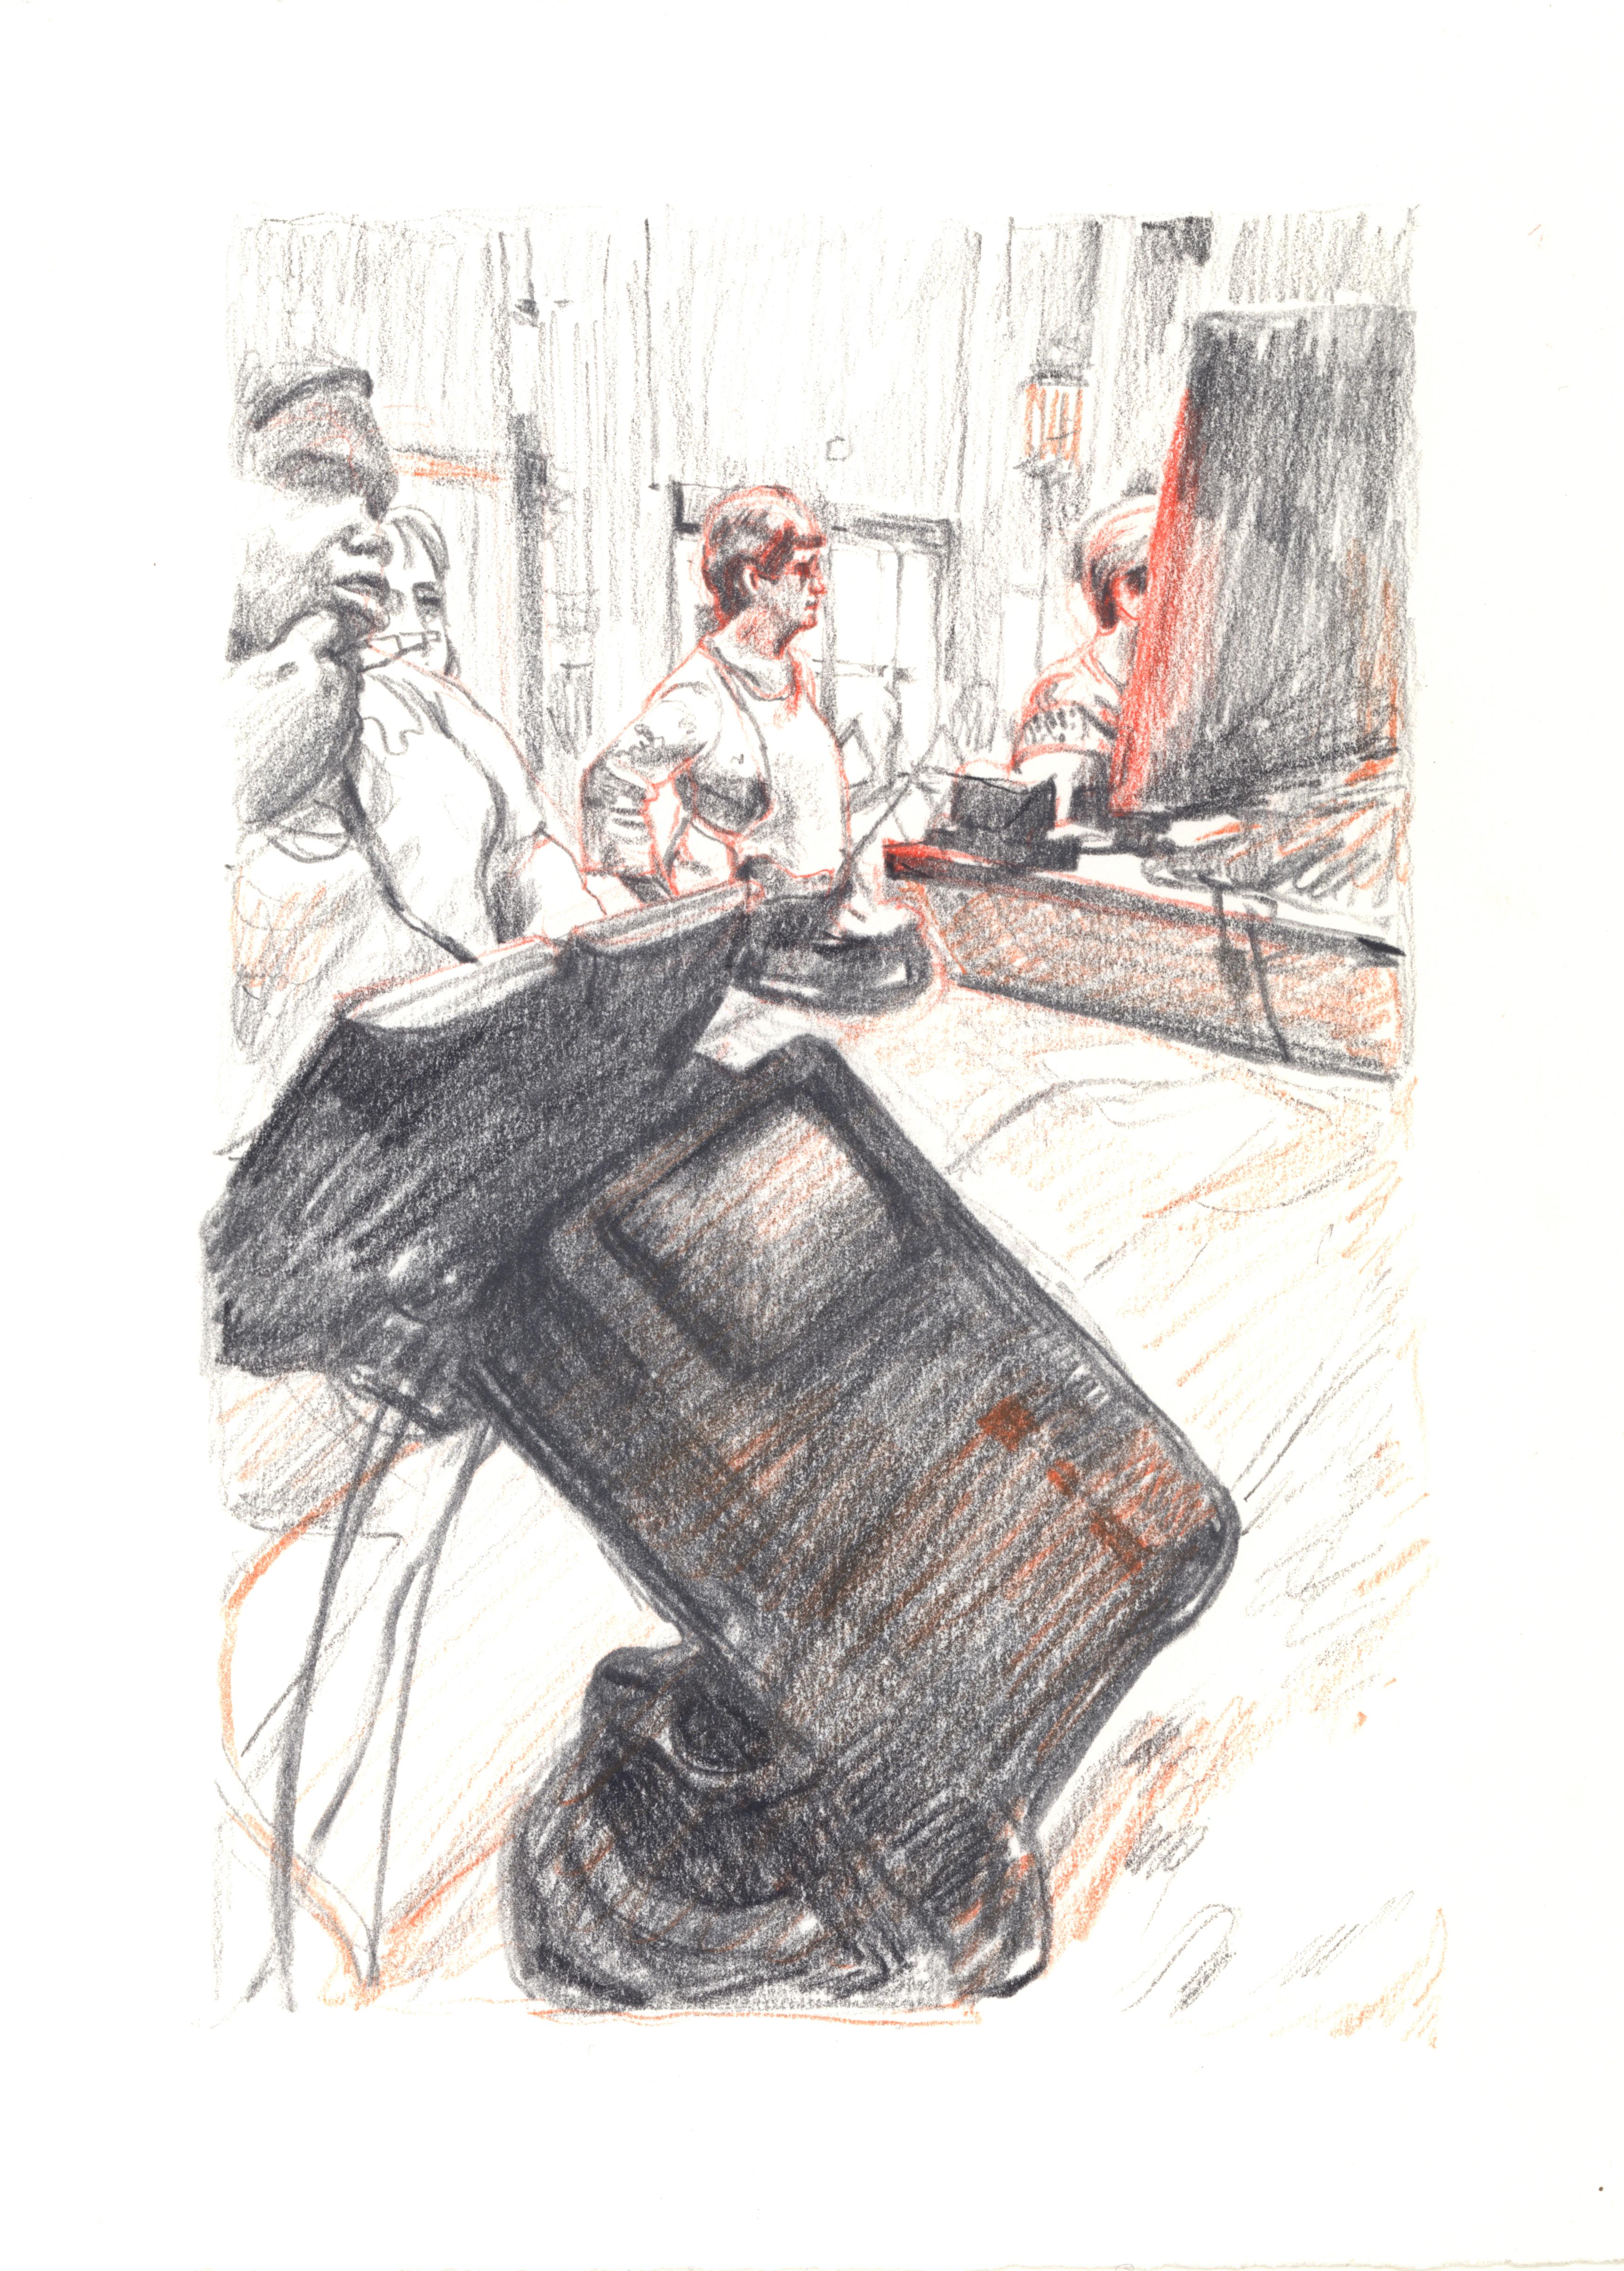 Eilis Crean Interior Art - "Marketplace Cashier #46" - interior drawing - colorful work on paper - Daumier